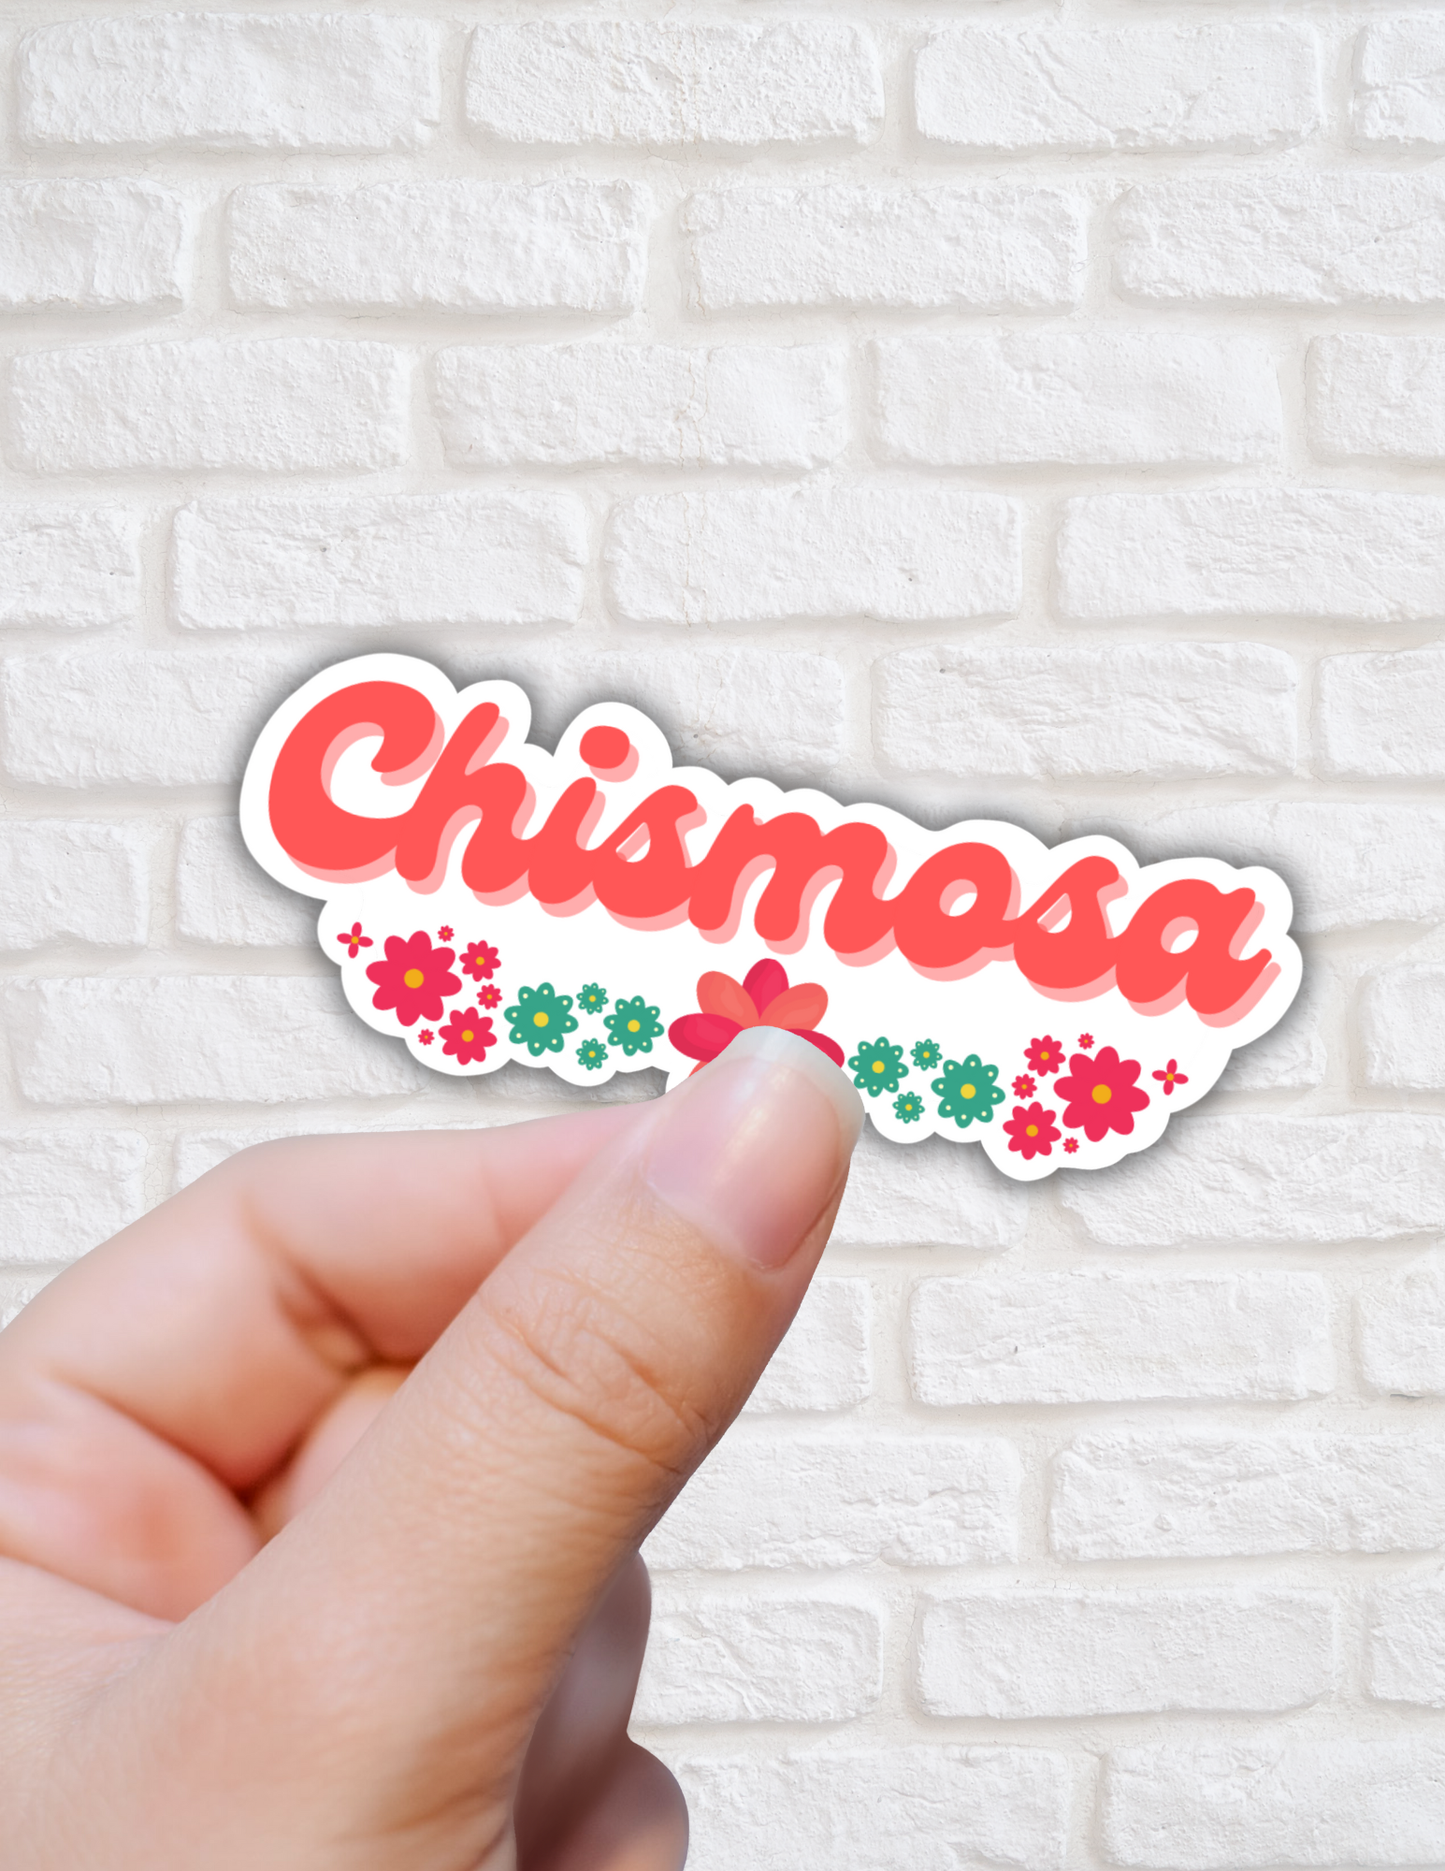 Chismosa sticker,funny latina stickers